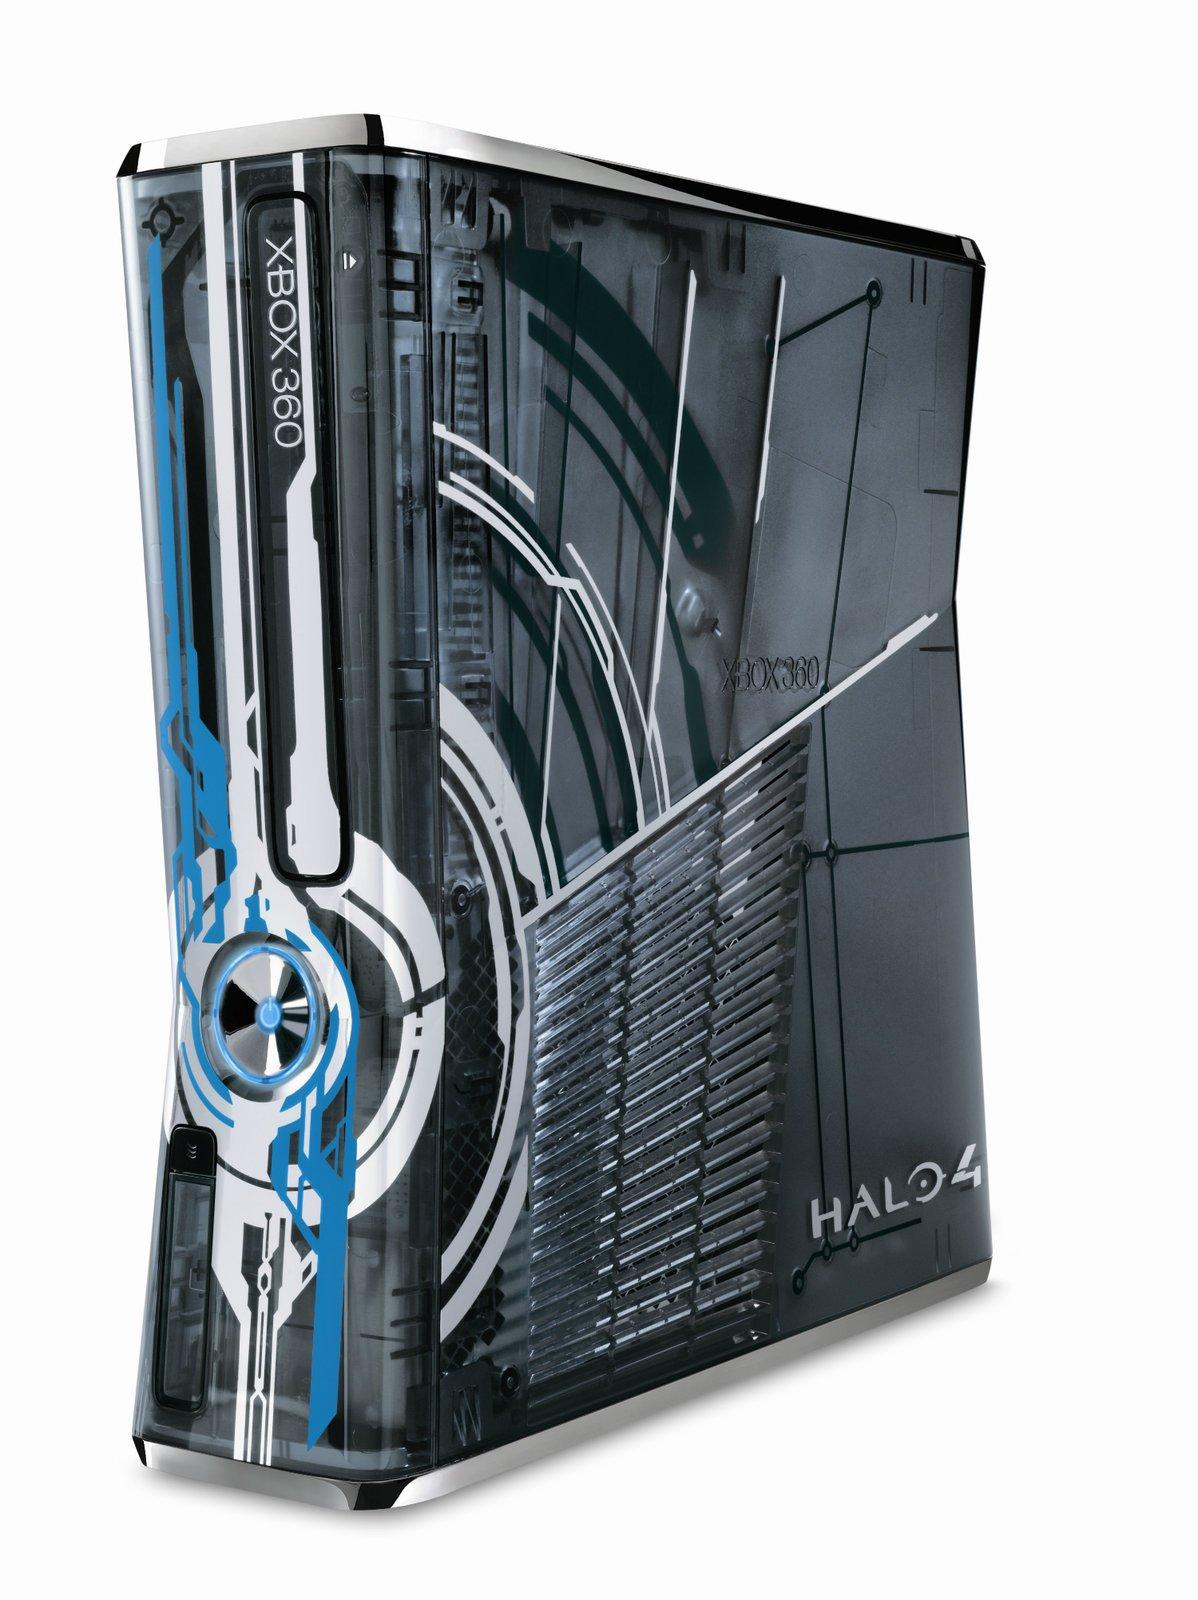 xbox-360-s-320gb-system-halo-4-gamestop-premium-refurbished